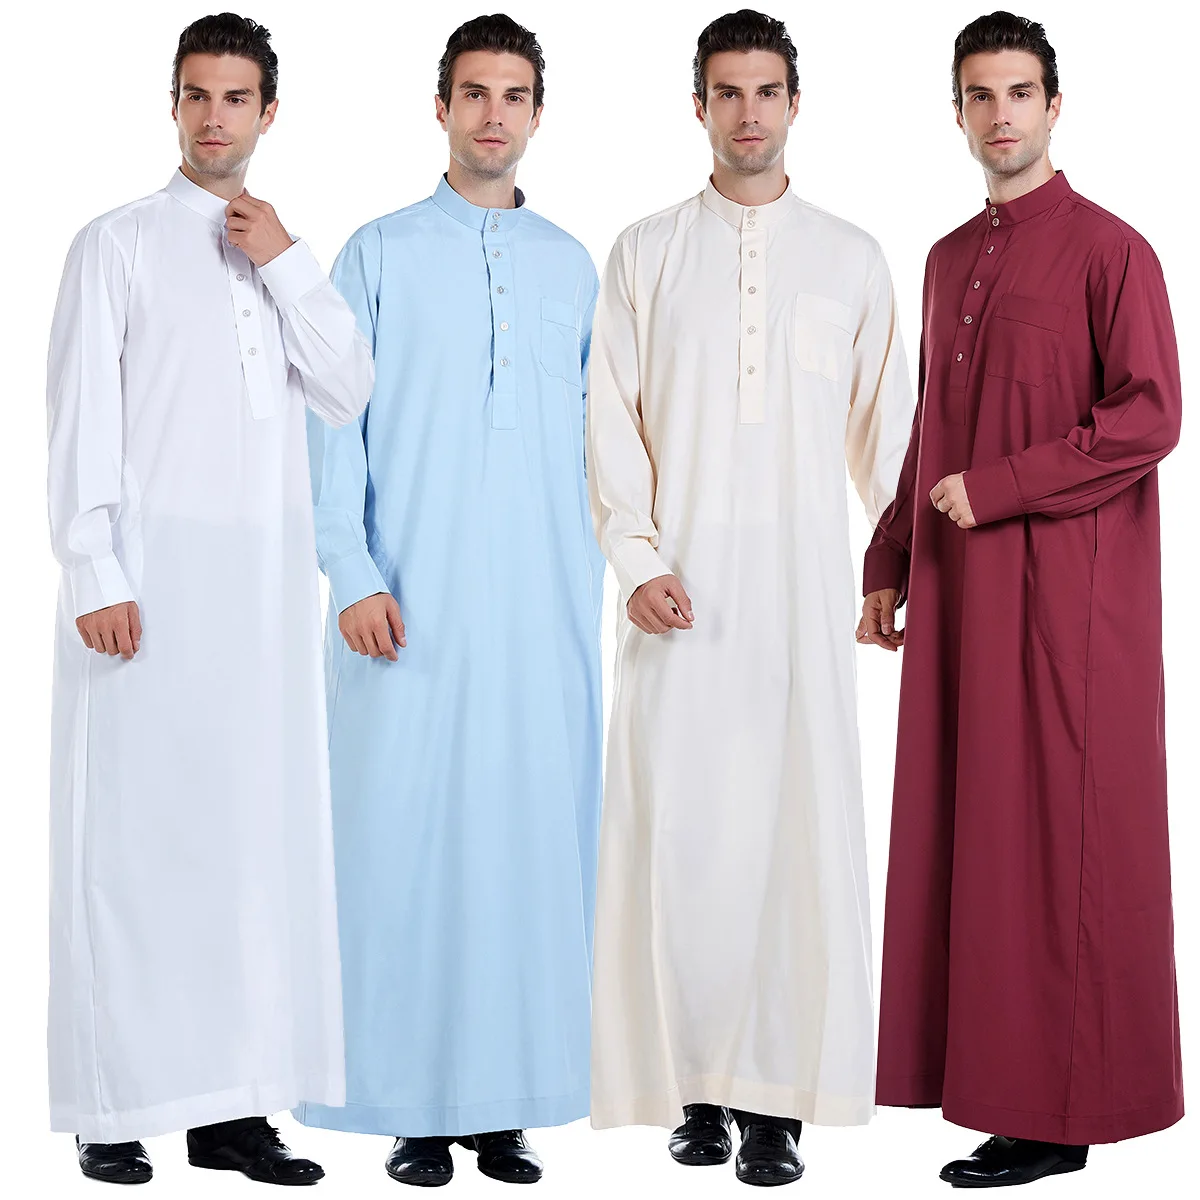 

Muslim Men Jubba Thobe Long Sleeve Solid Color Breathable Robes 2021 Stand Collar Islamic Arabic Kaftan Men Abaya clothes, Photo shown